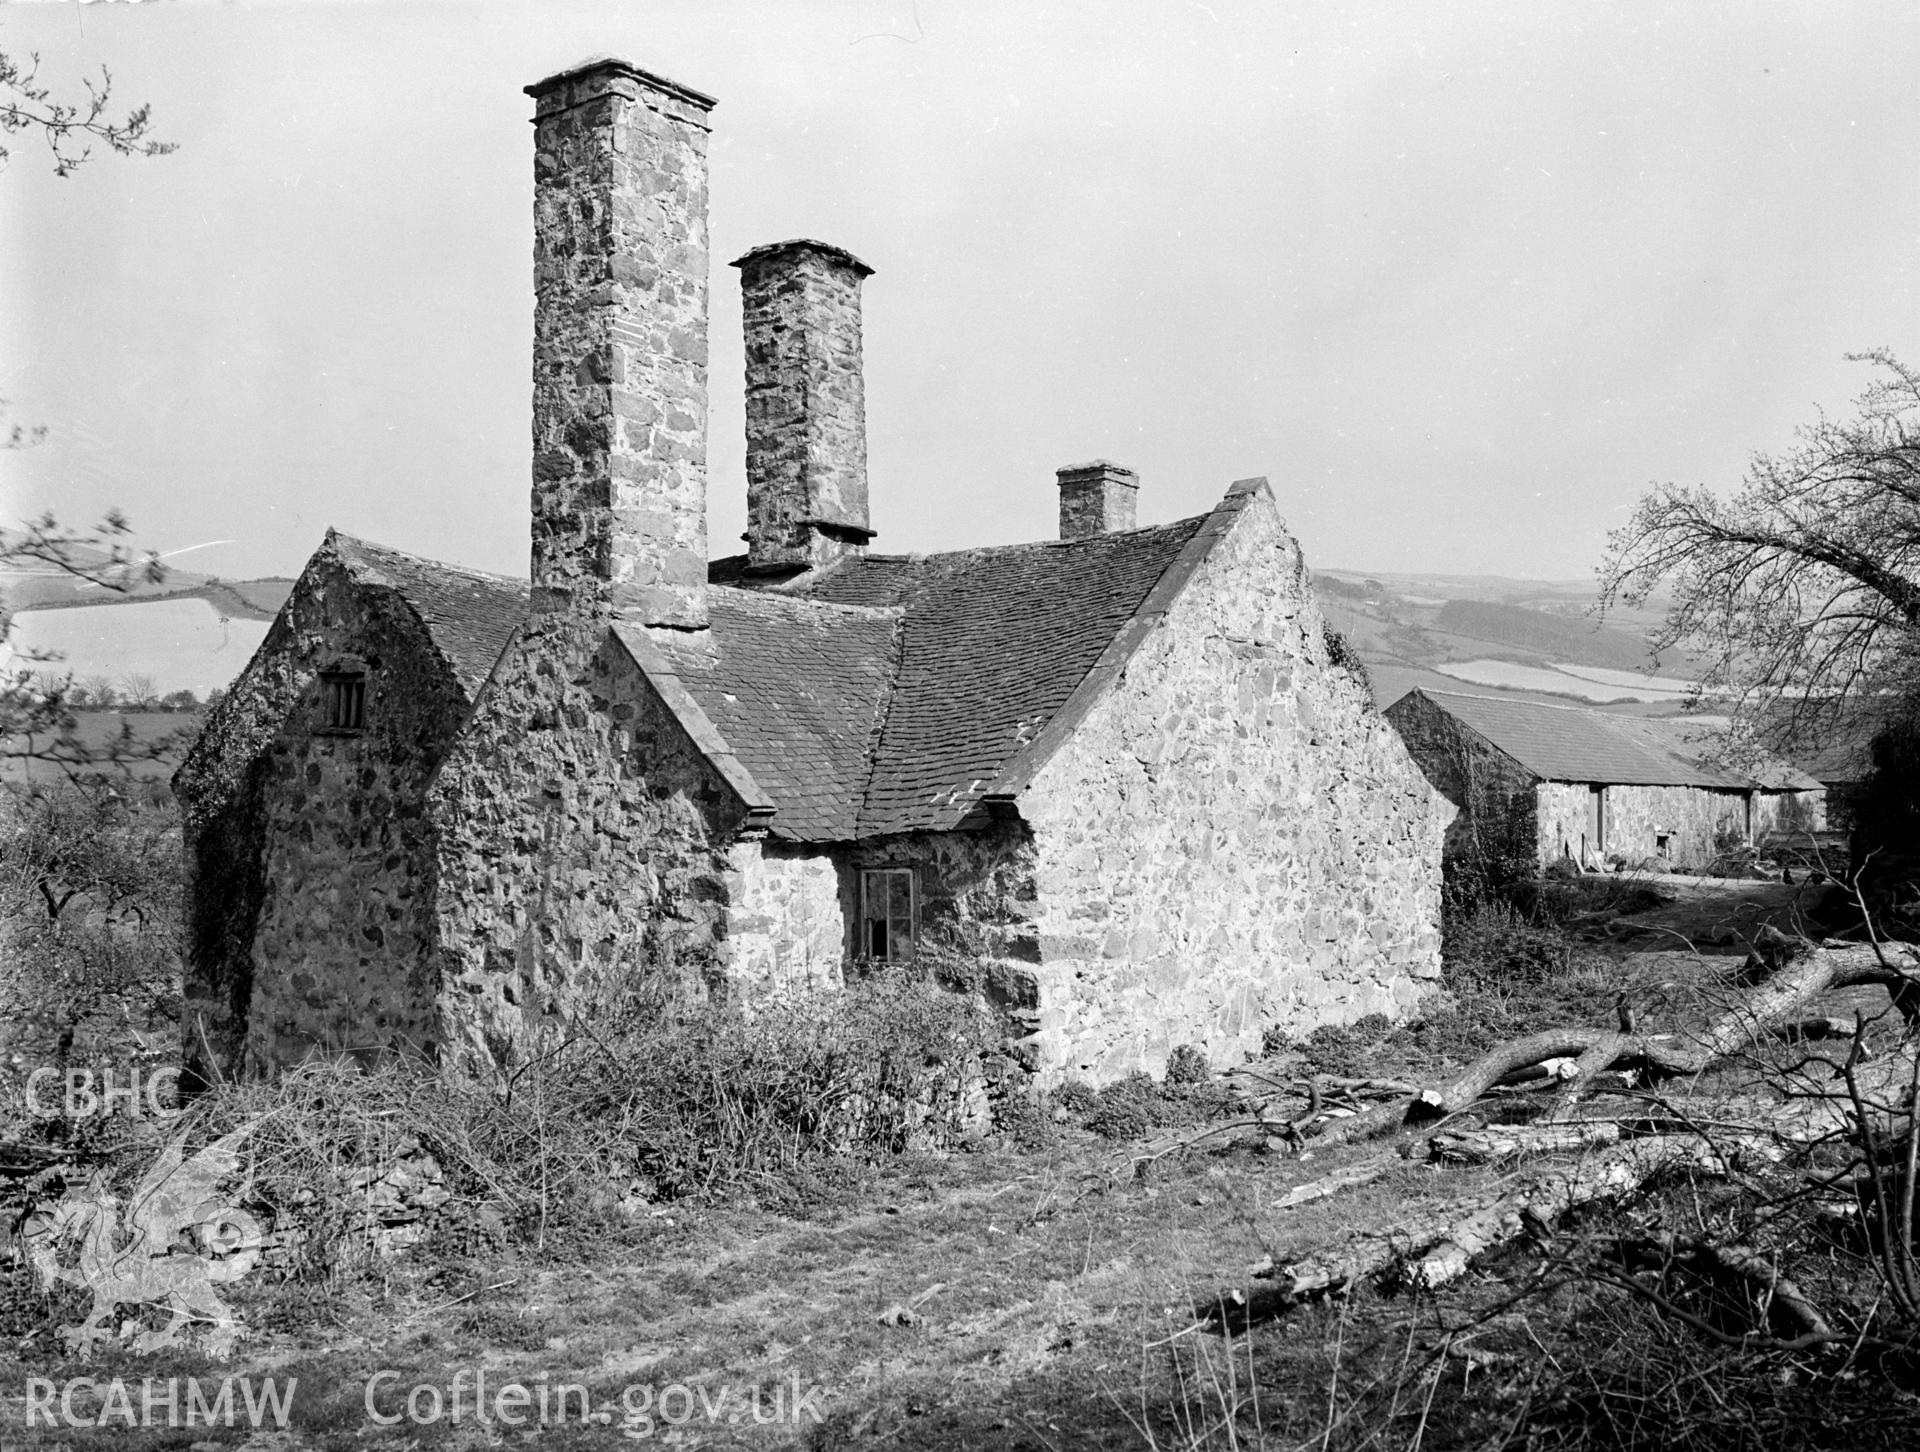 The rear of Plas Llan, showing the three chimneys.